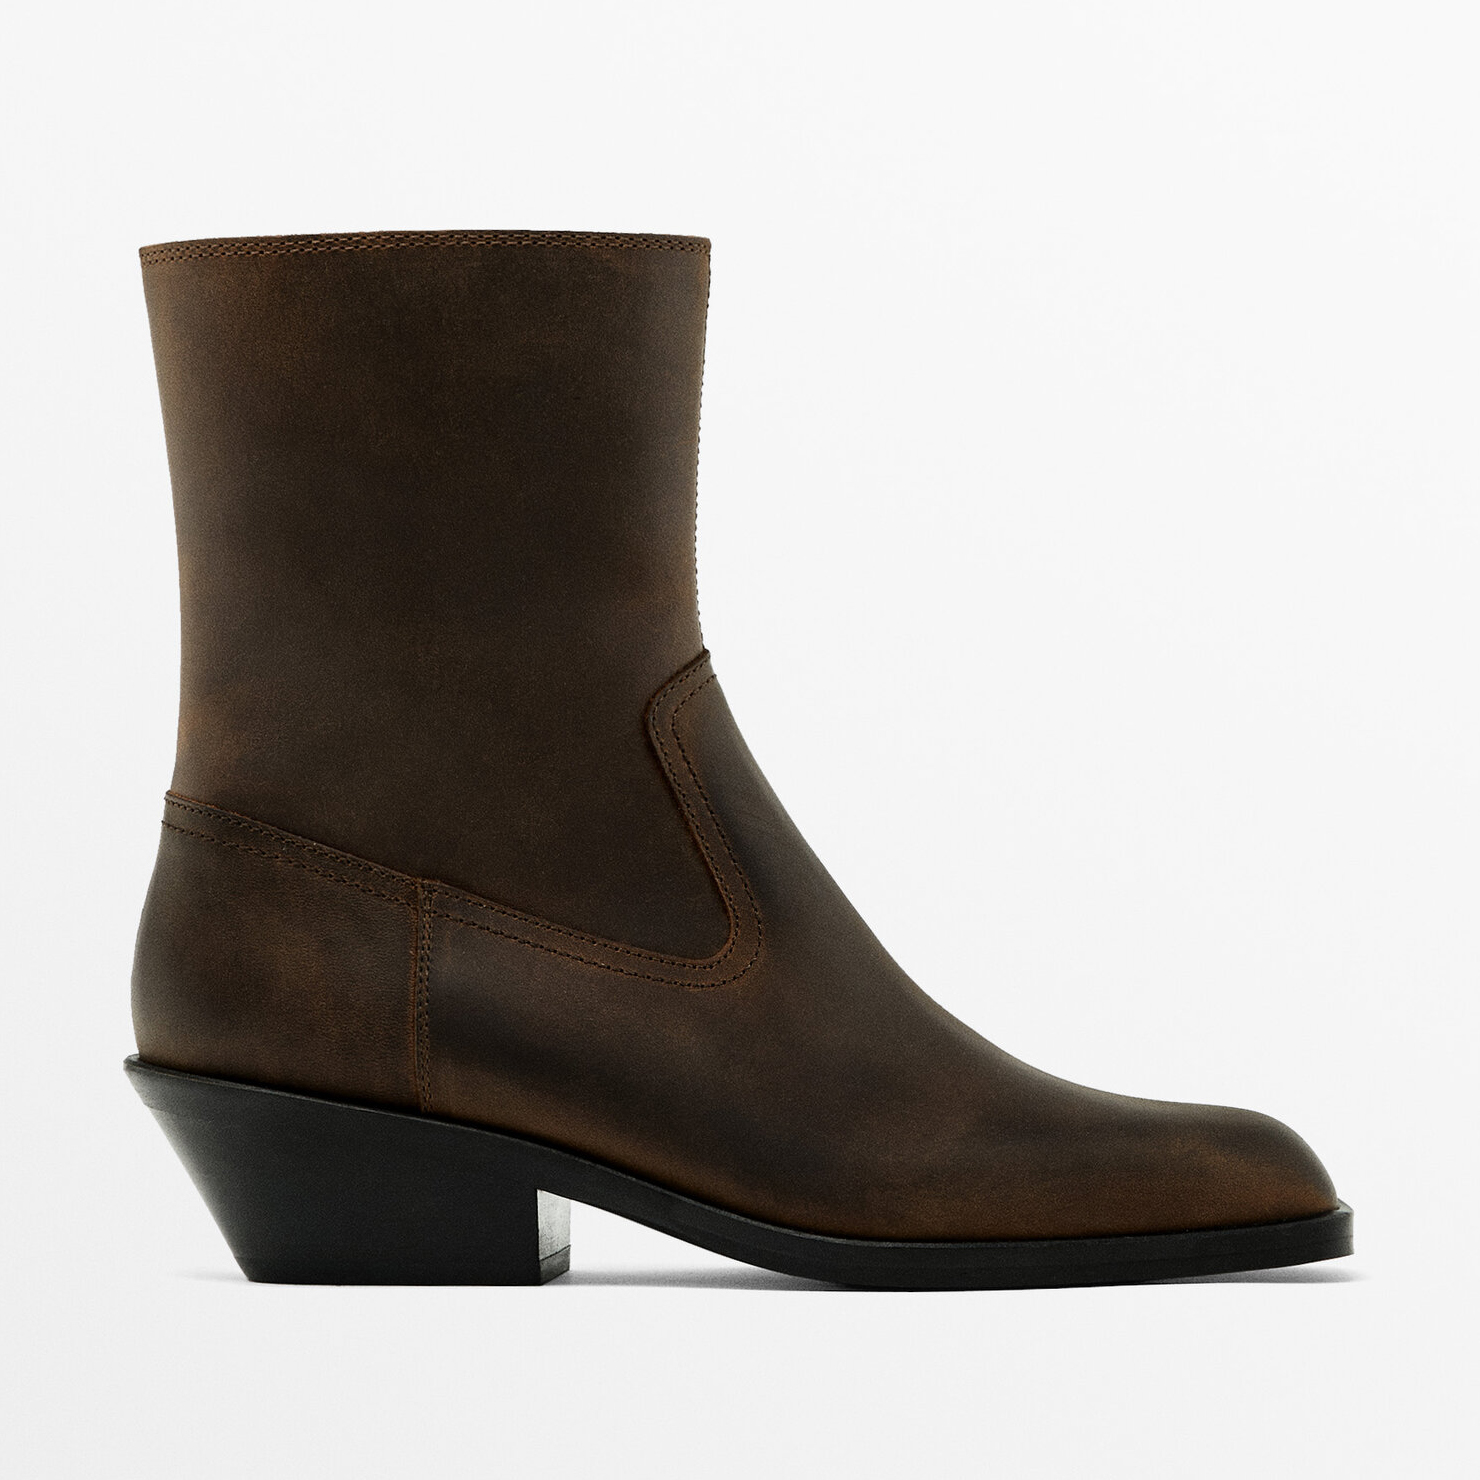 Полусапоги Massimo Dutti Heeled Square-toe Ankle, коричневый полусапоги женские коричневые